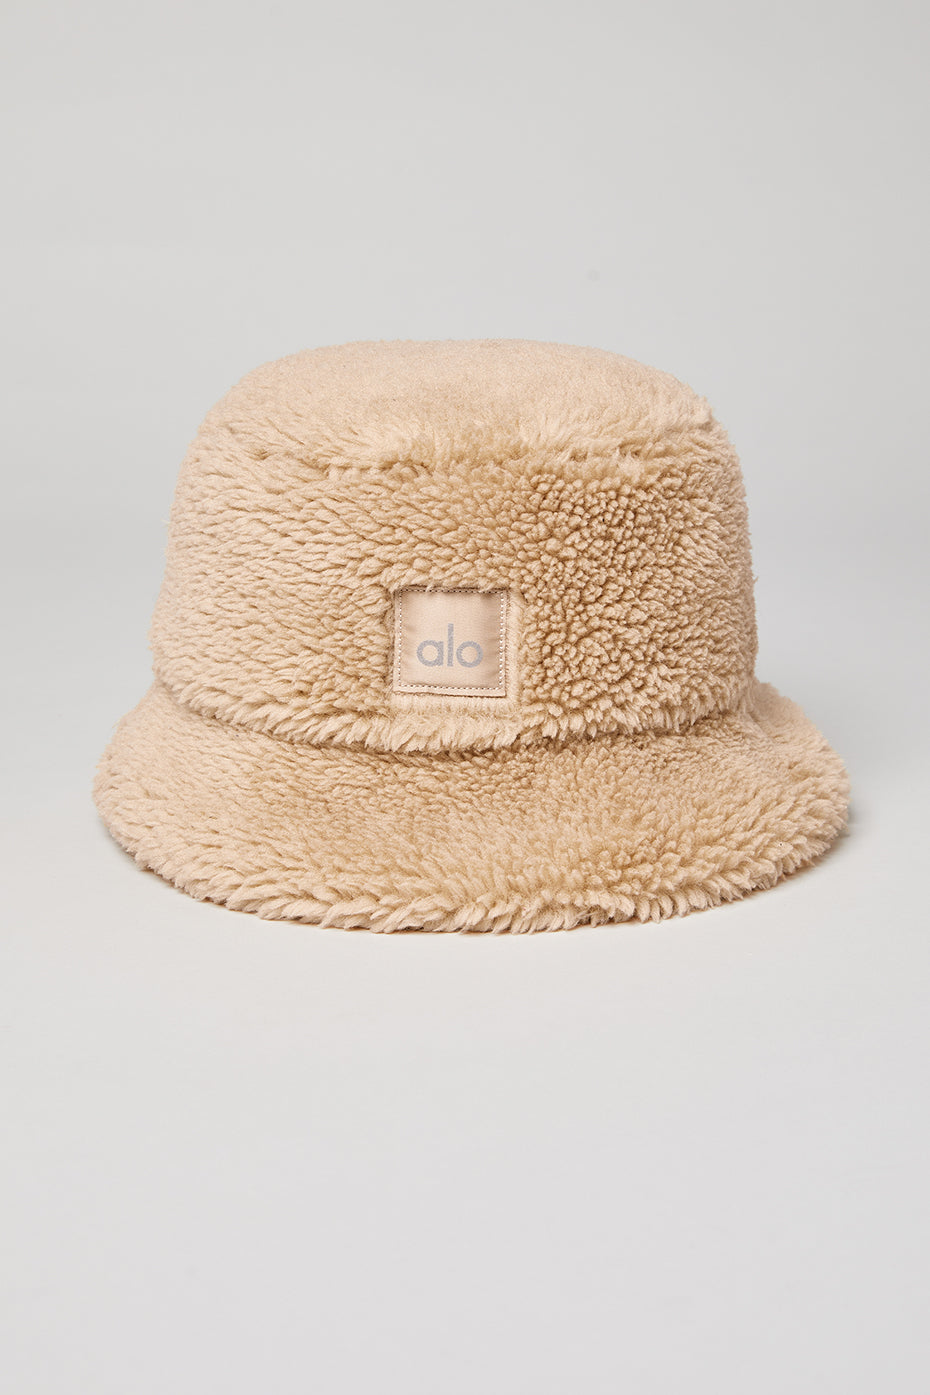 Alo Yoga | Faux Fur Bucket Hat in Ivory White, Size: Medium/Large